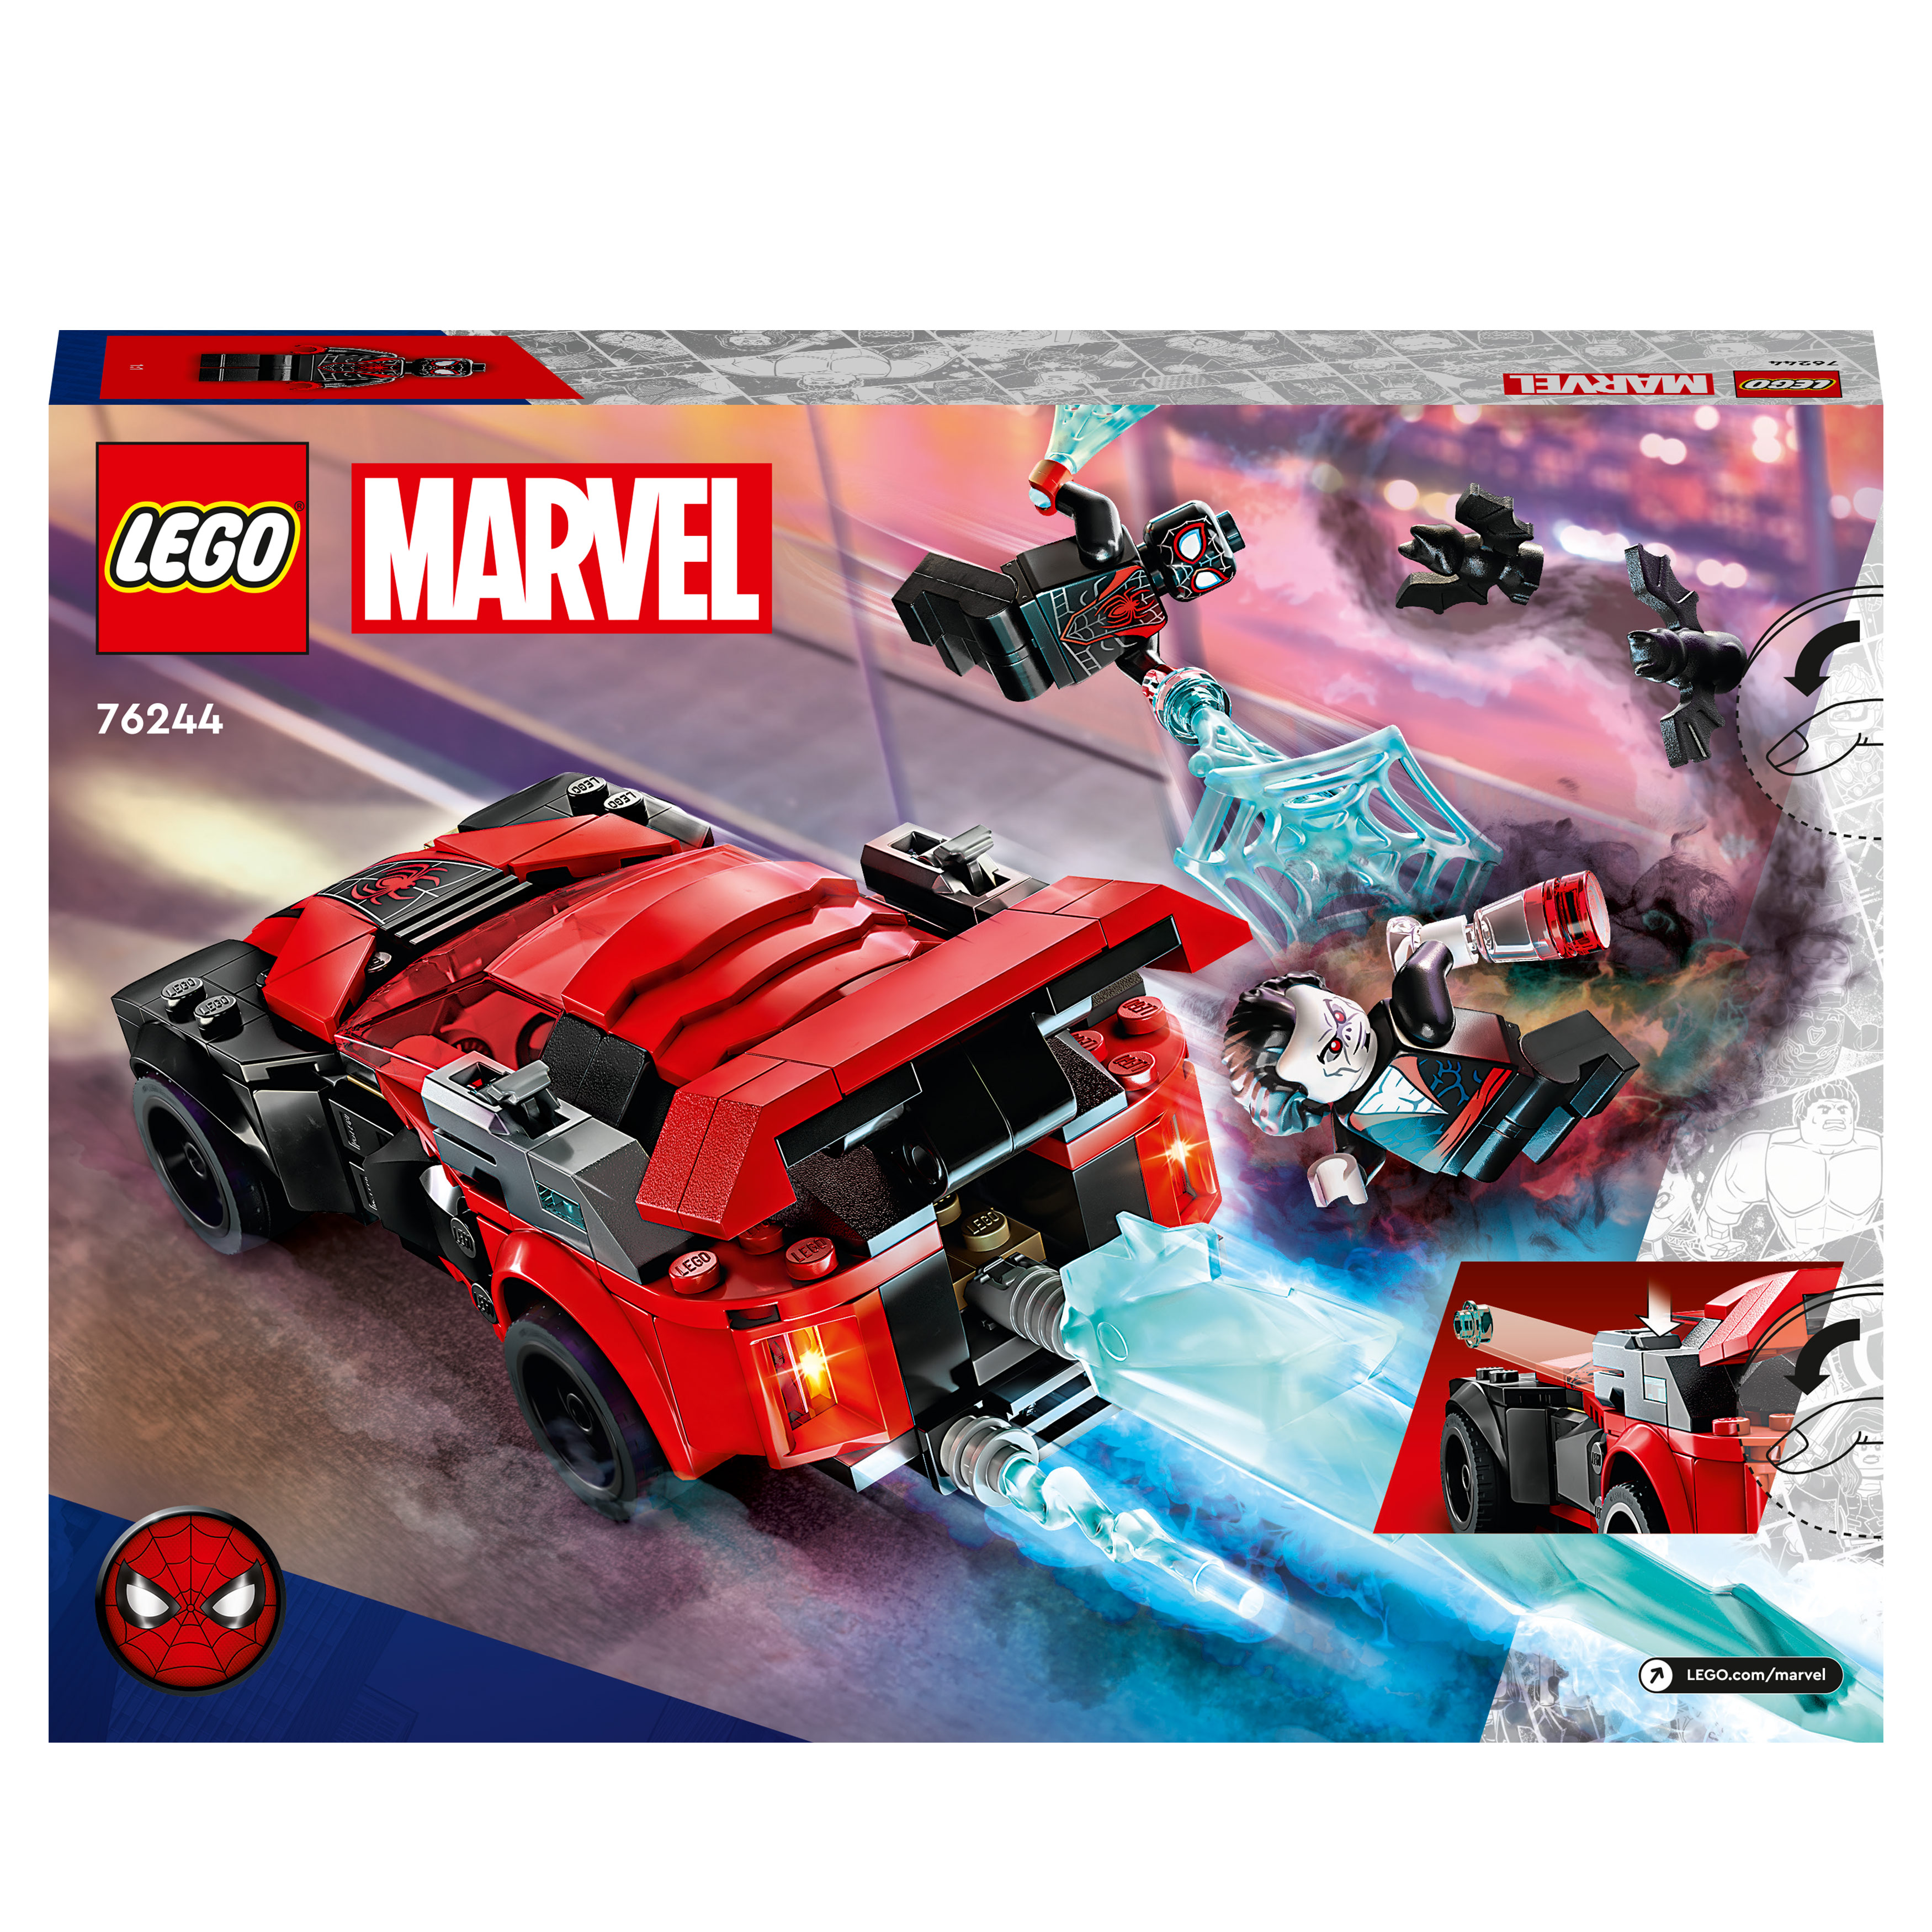 76244 vs. Marvel Bausatz, LEGO Mehrfarbig Morales Miles Morbius